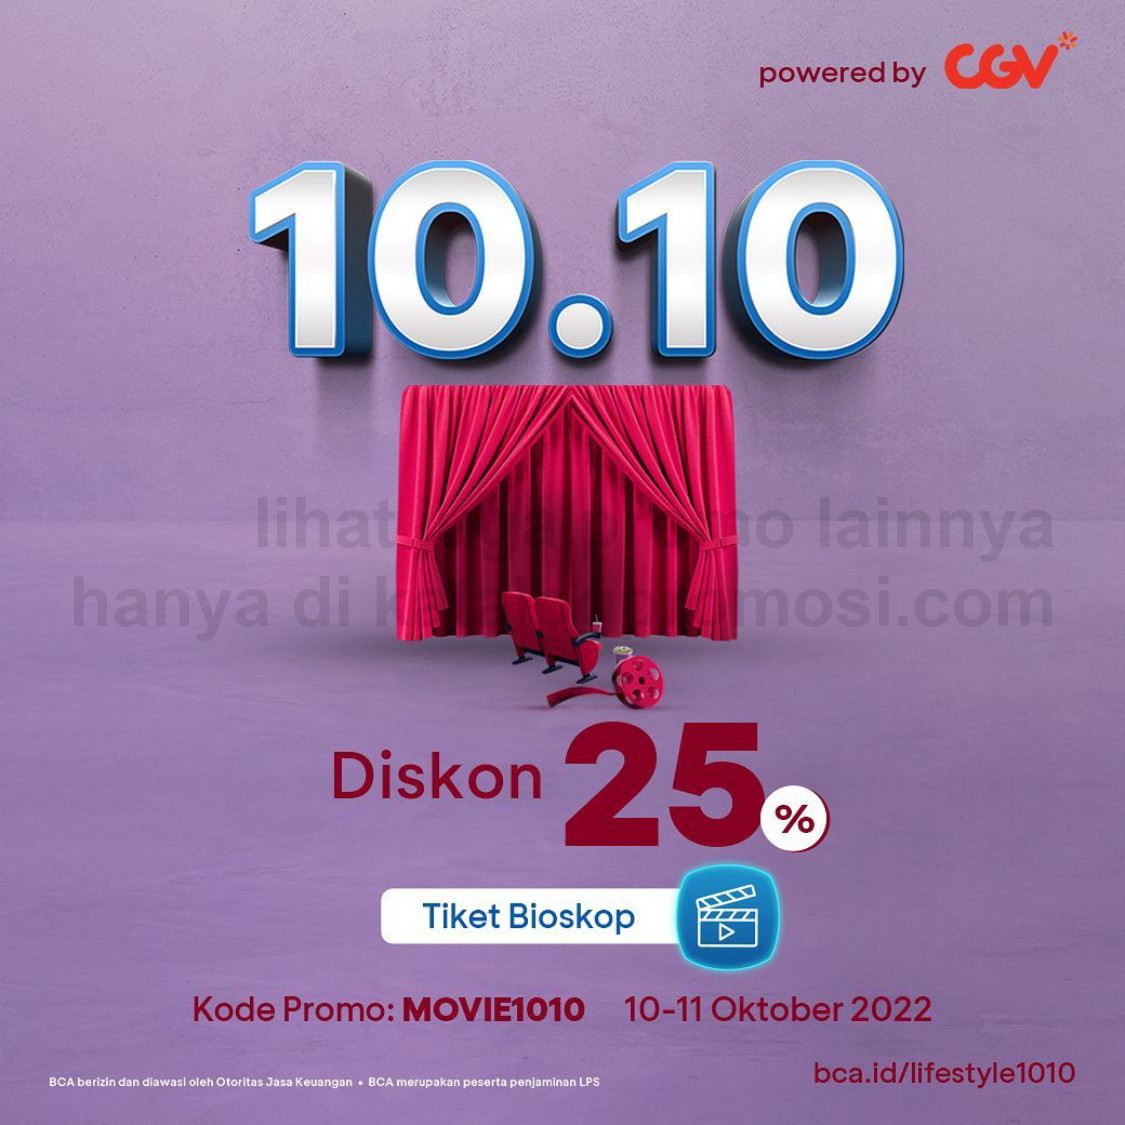 Promo CGV Cinema Diskon 25% Tiket Nonton buat pengguna Lifestye di Mobile BCA!